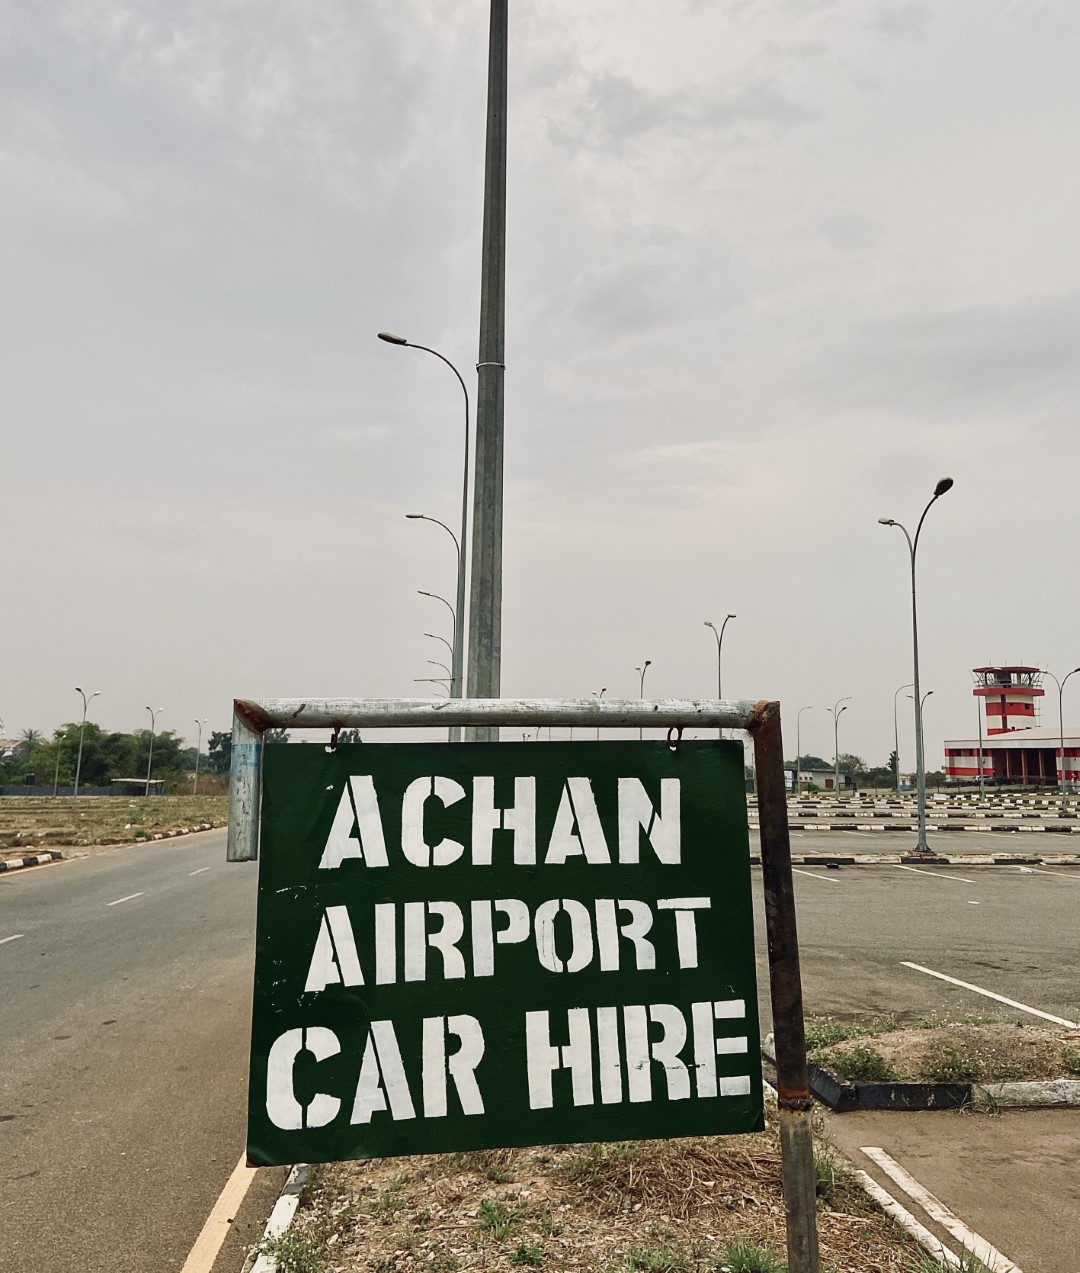 Achan Airport car hire sign post